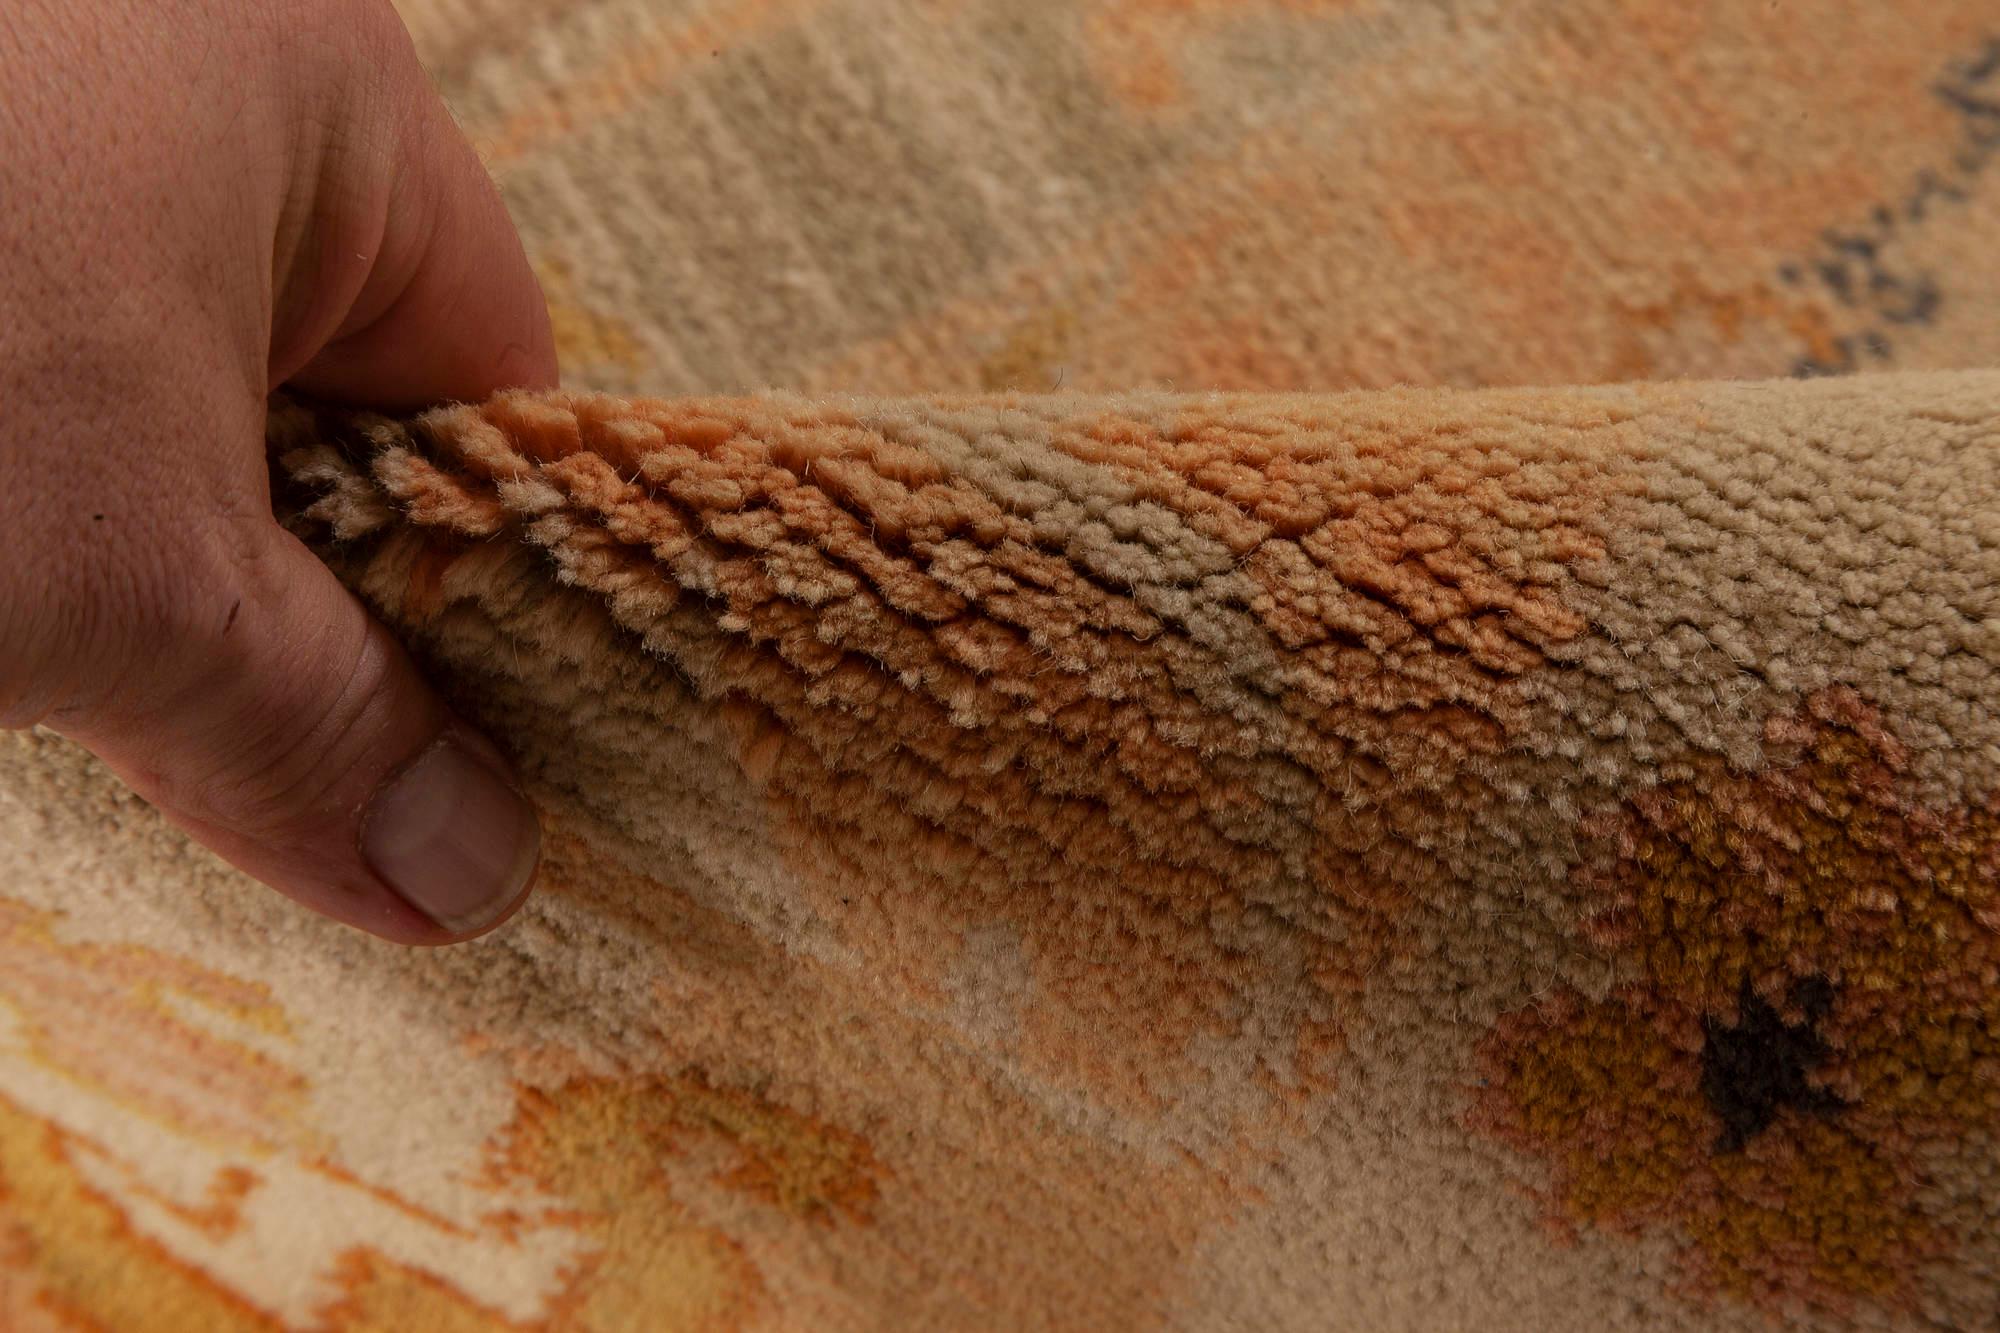 Mid-20th Century Spanish beige, blue, brown, orange hand knotted wool rug
Size: 8'10